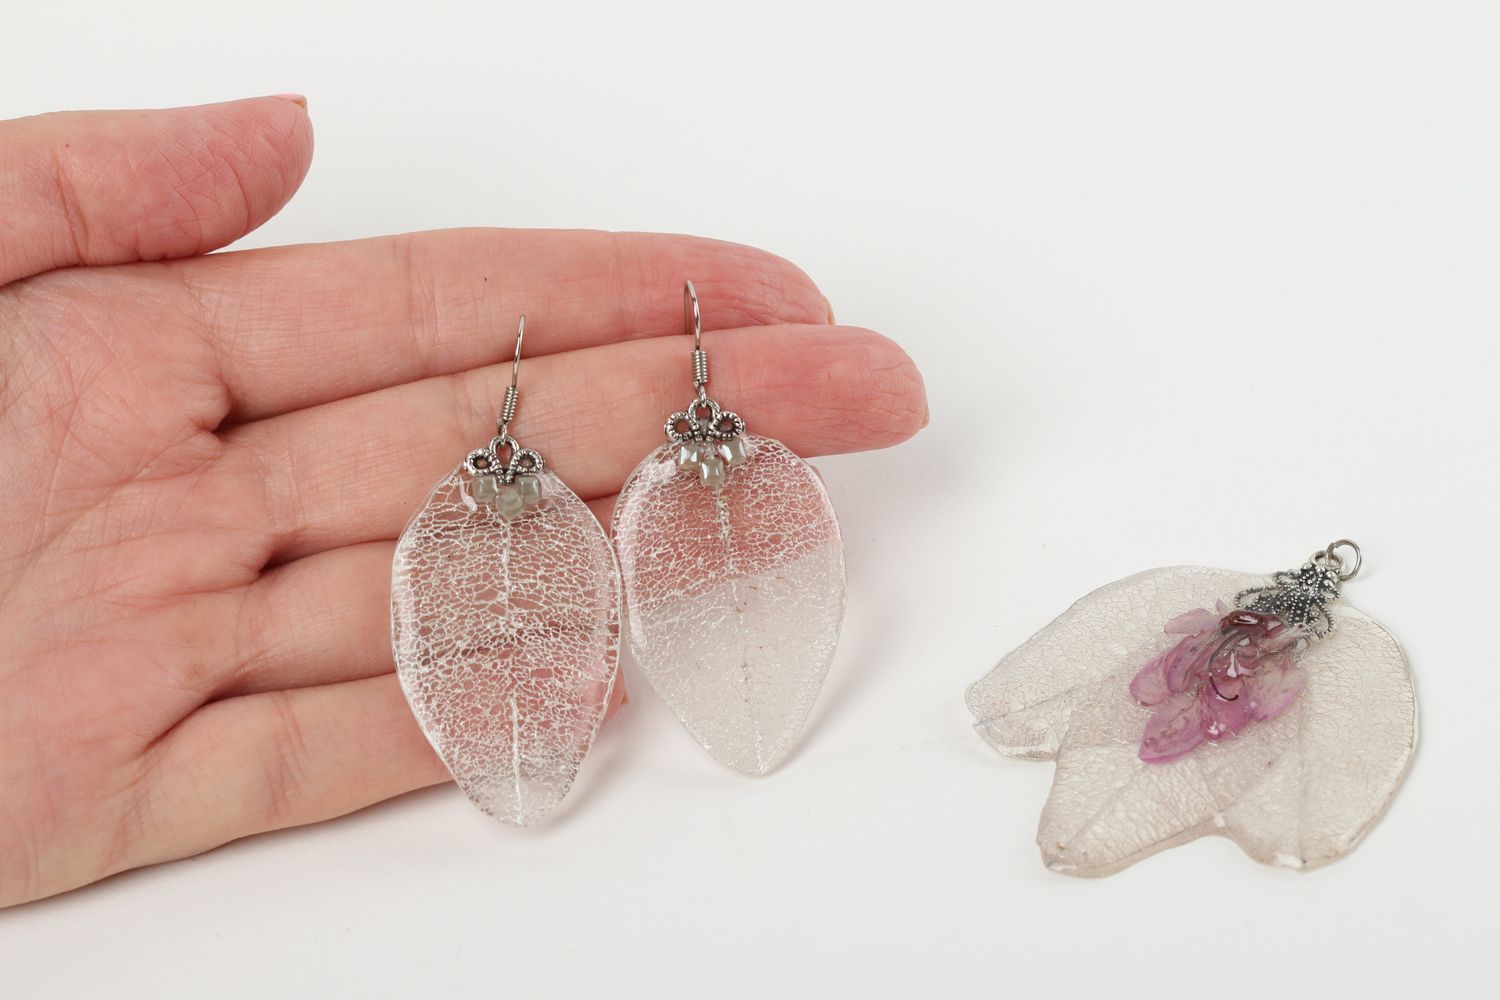 Handmade pendant handmade earrings with charms designer jewelry unusual gift photo 5